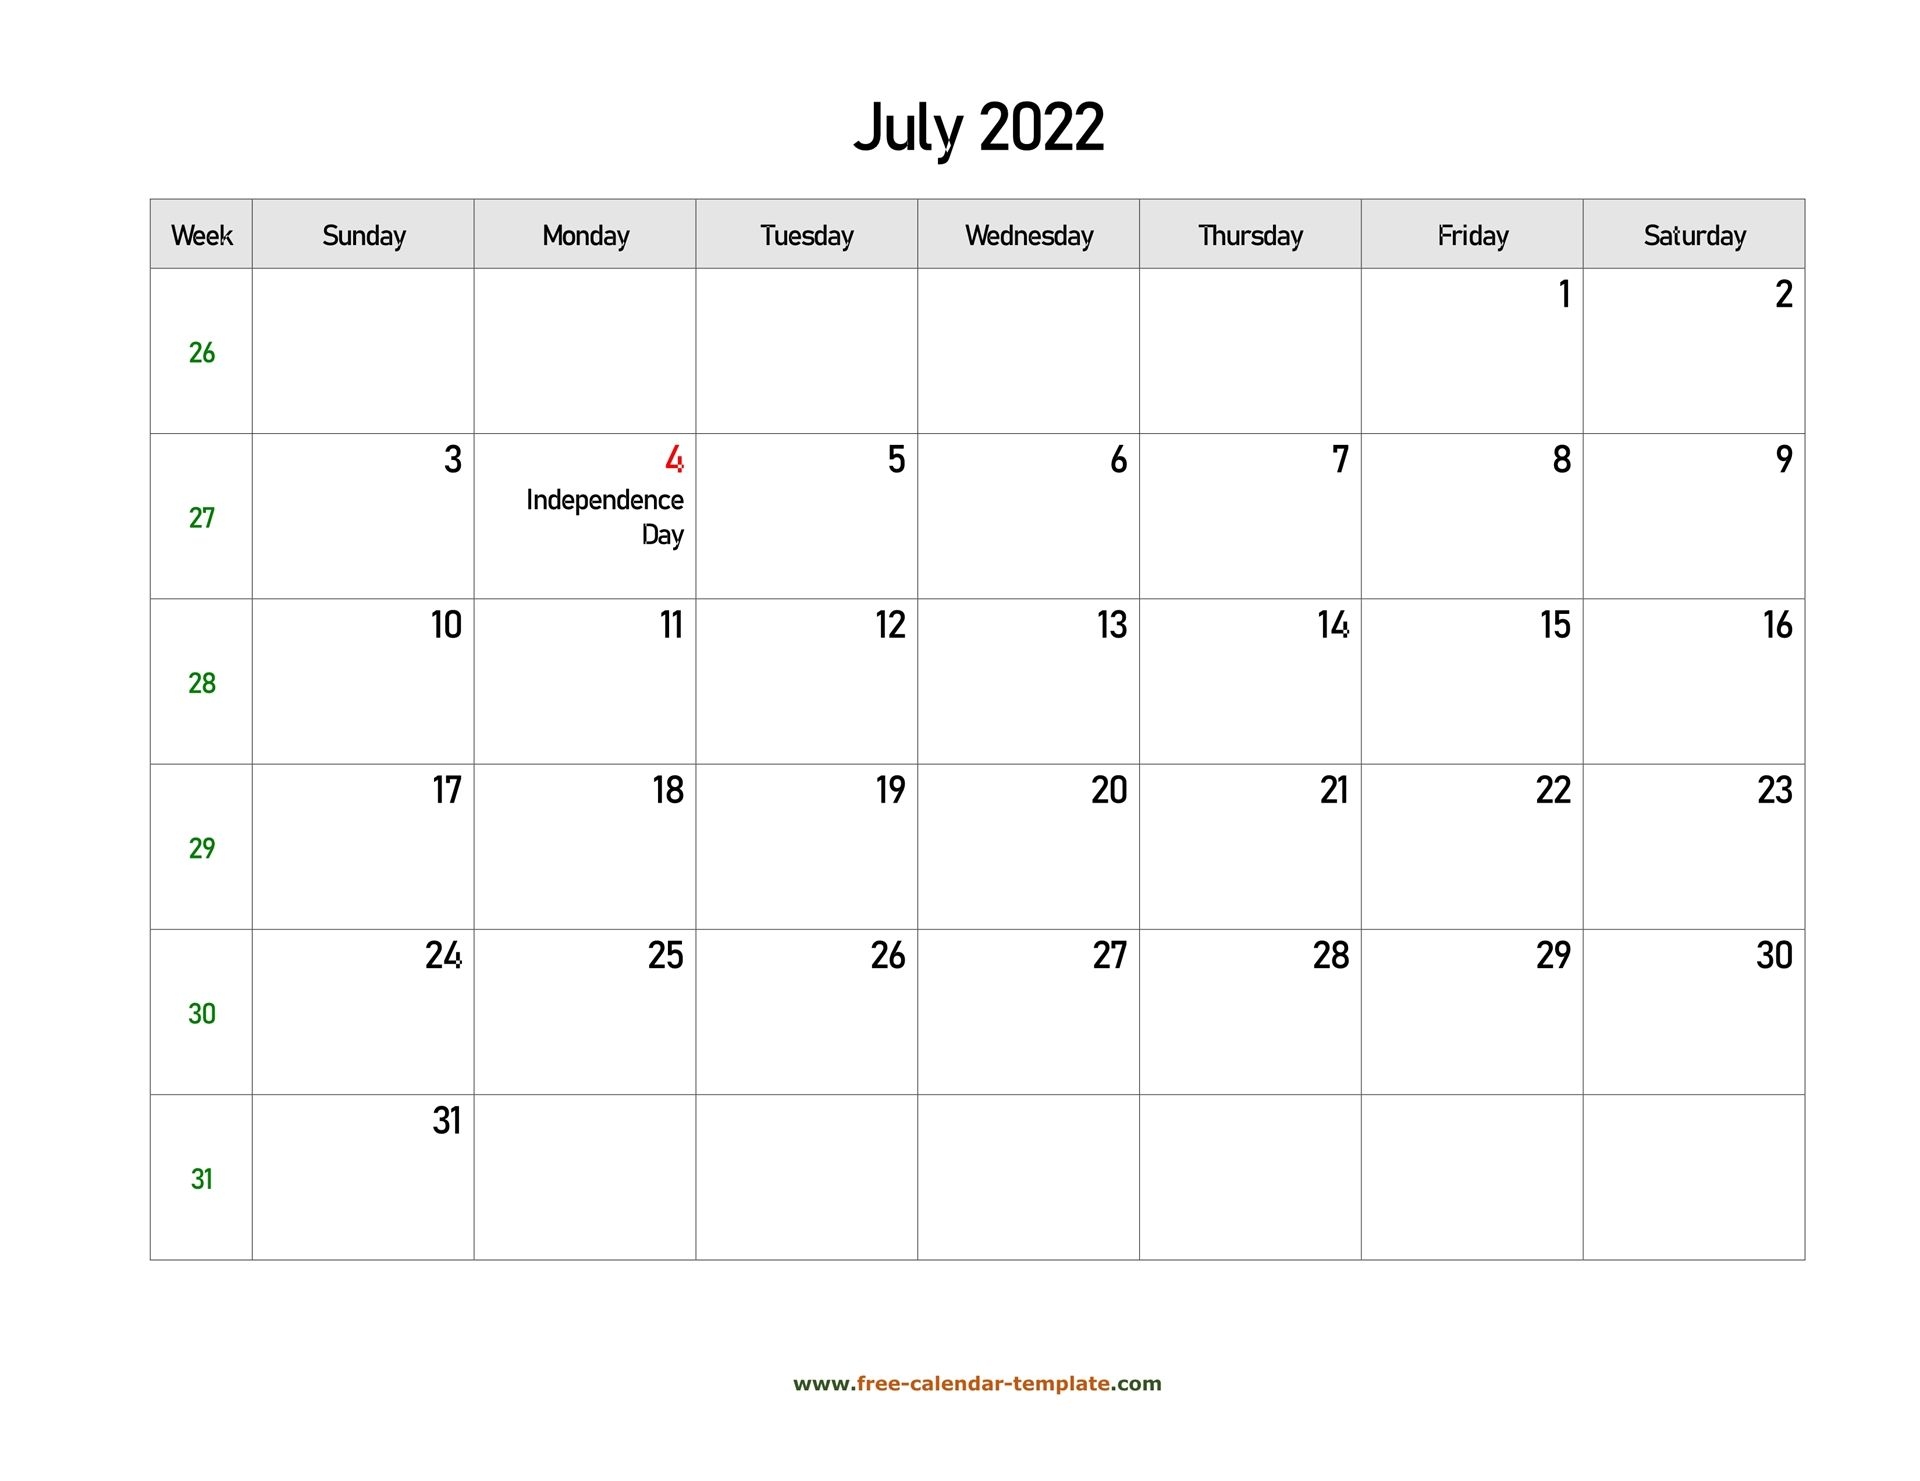 Free 2022 Calendar Blank July Template (Horizontal) | Free